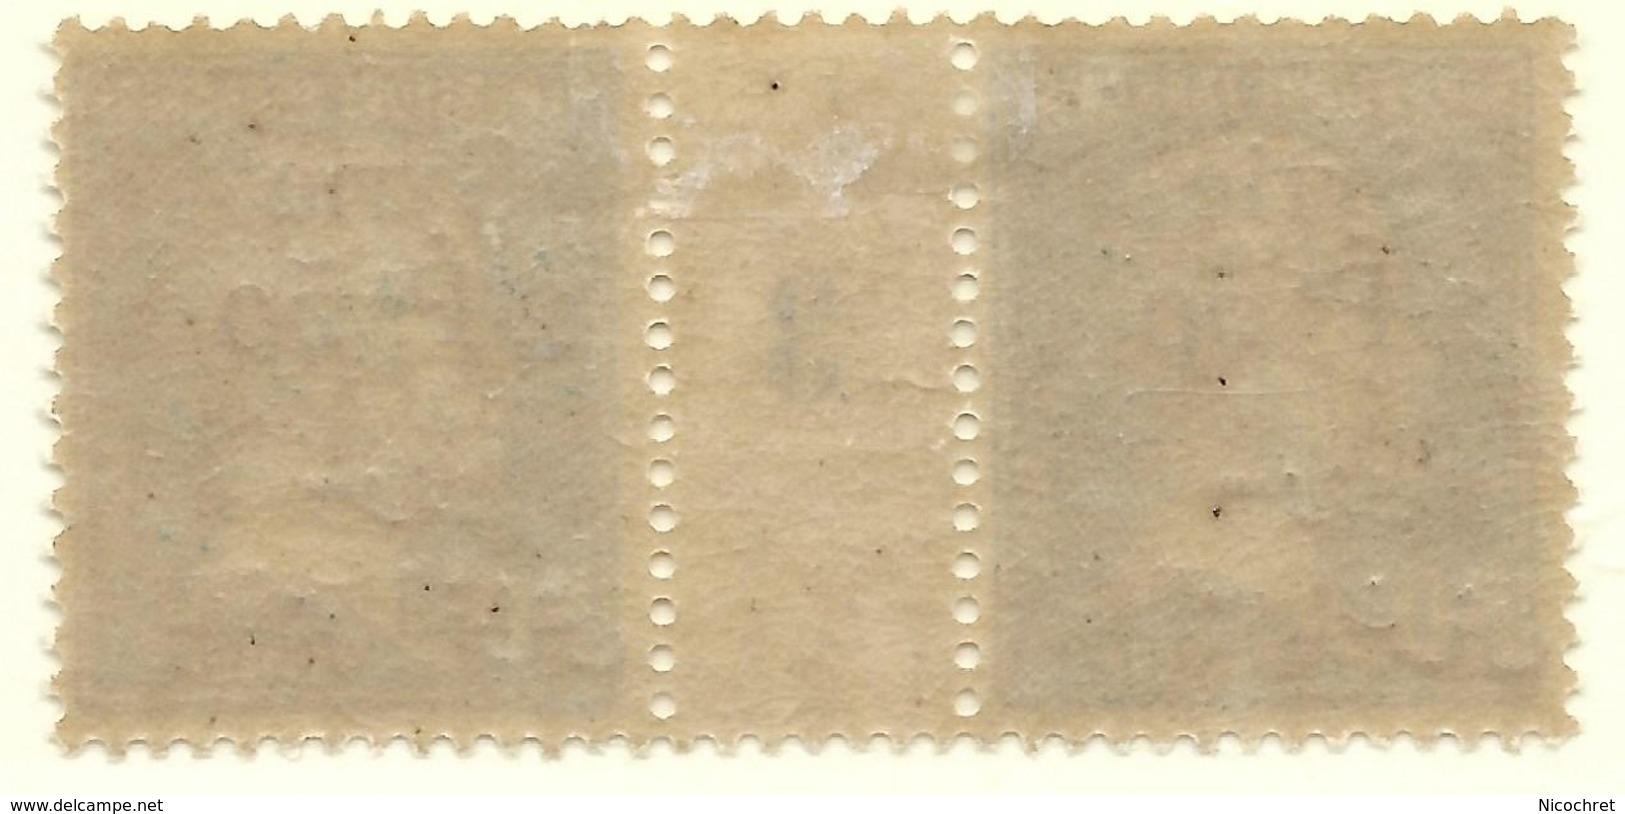 Millésime Pasteur Syrie Yvert 147 Maury 141 - Unused Stamps